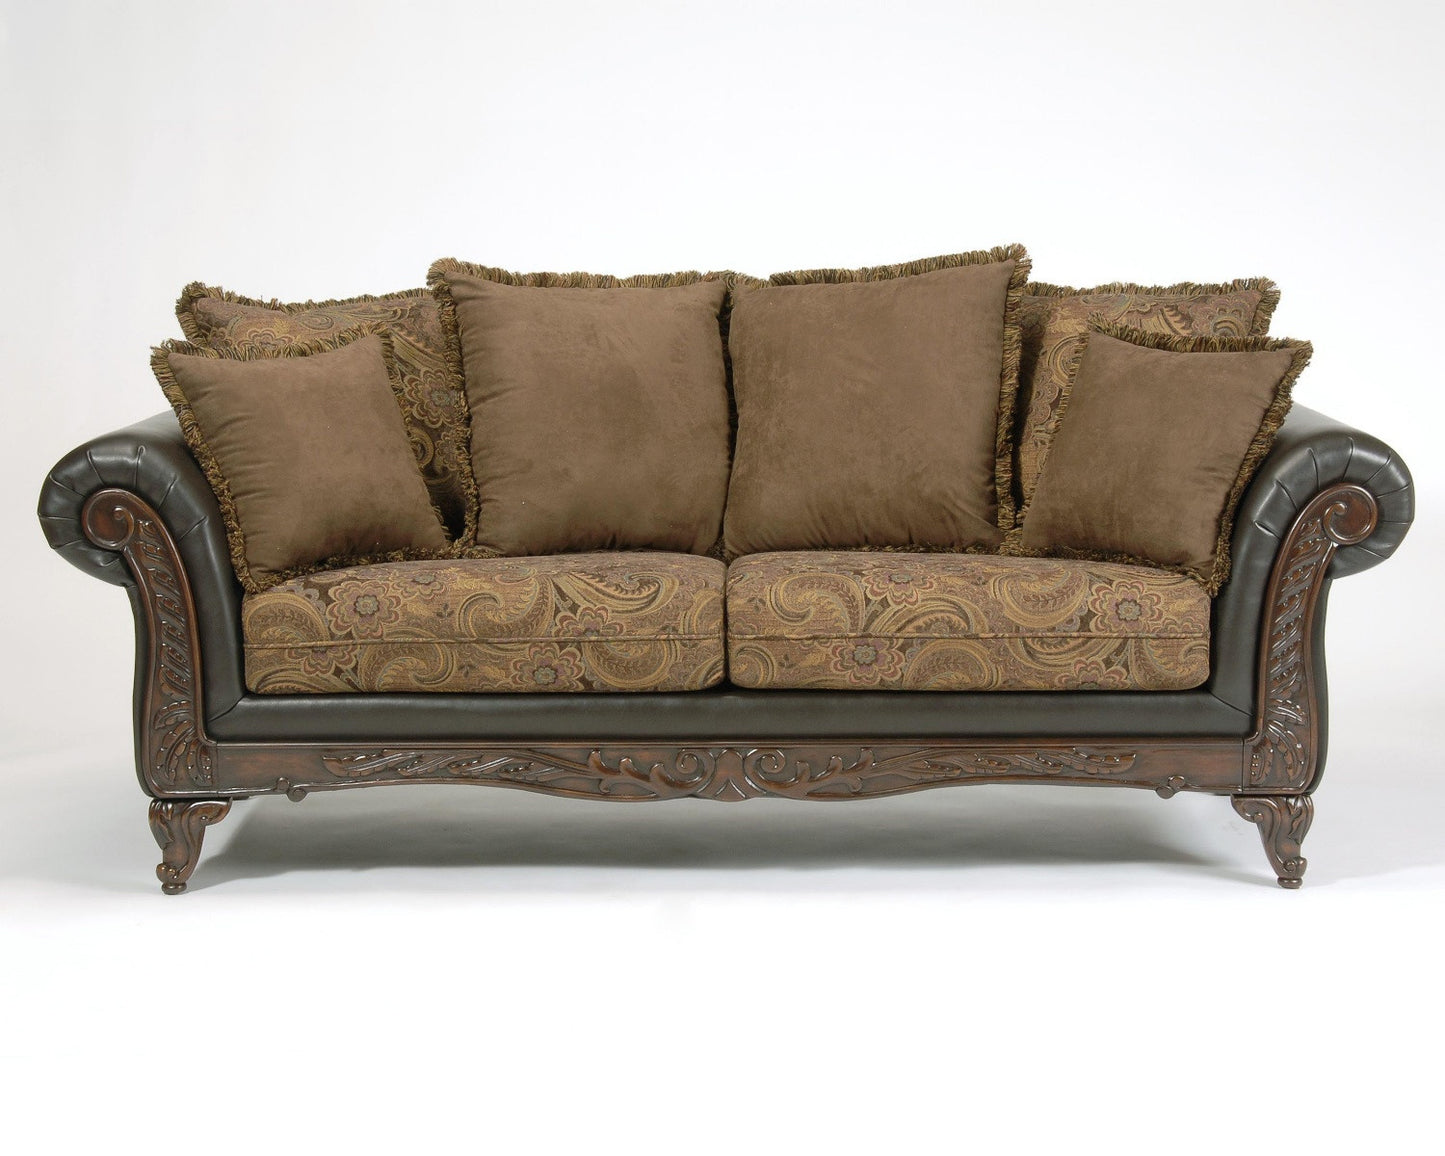 Silas Raisin wood trim sofa and loveseat by Serta Upholstery